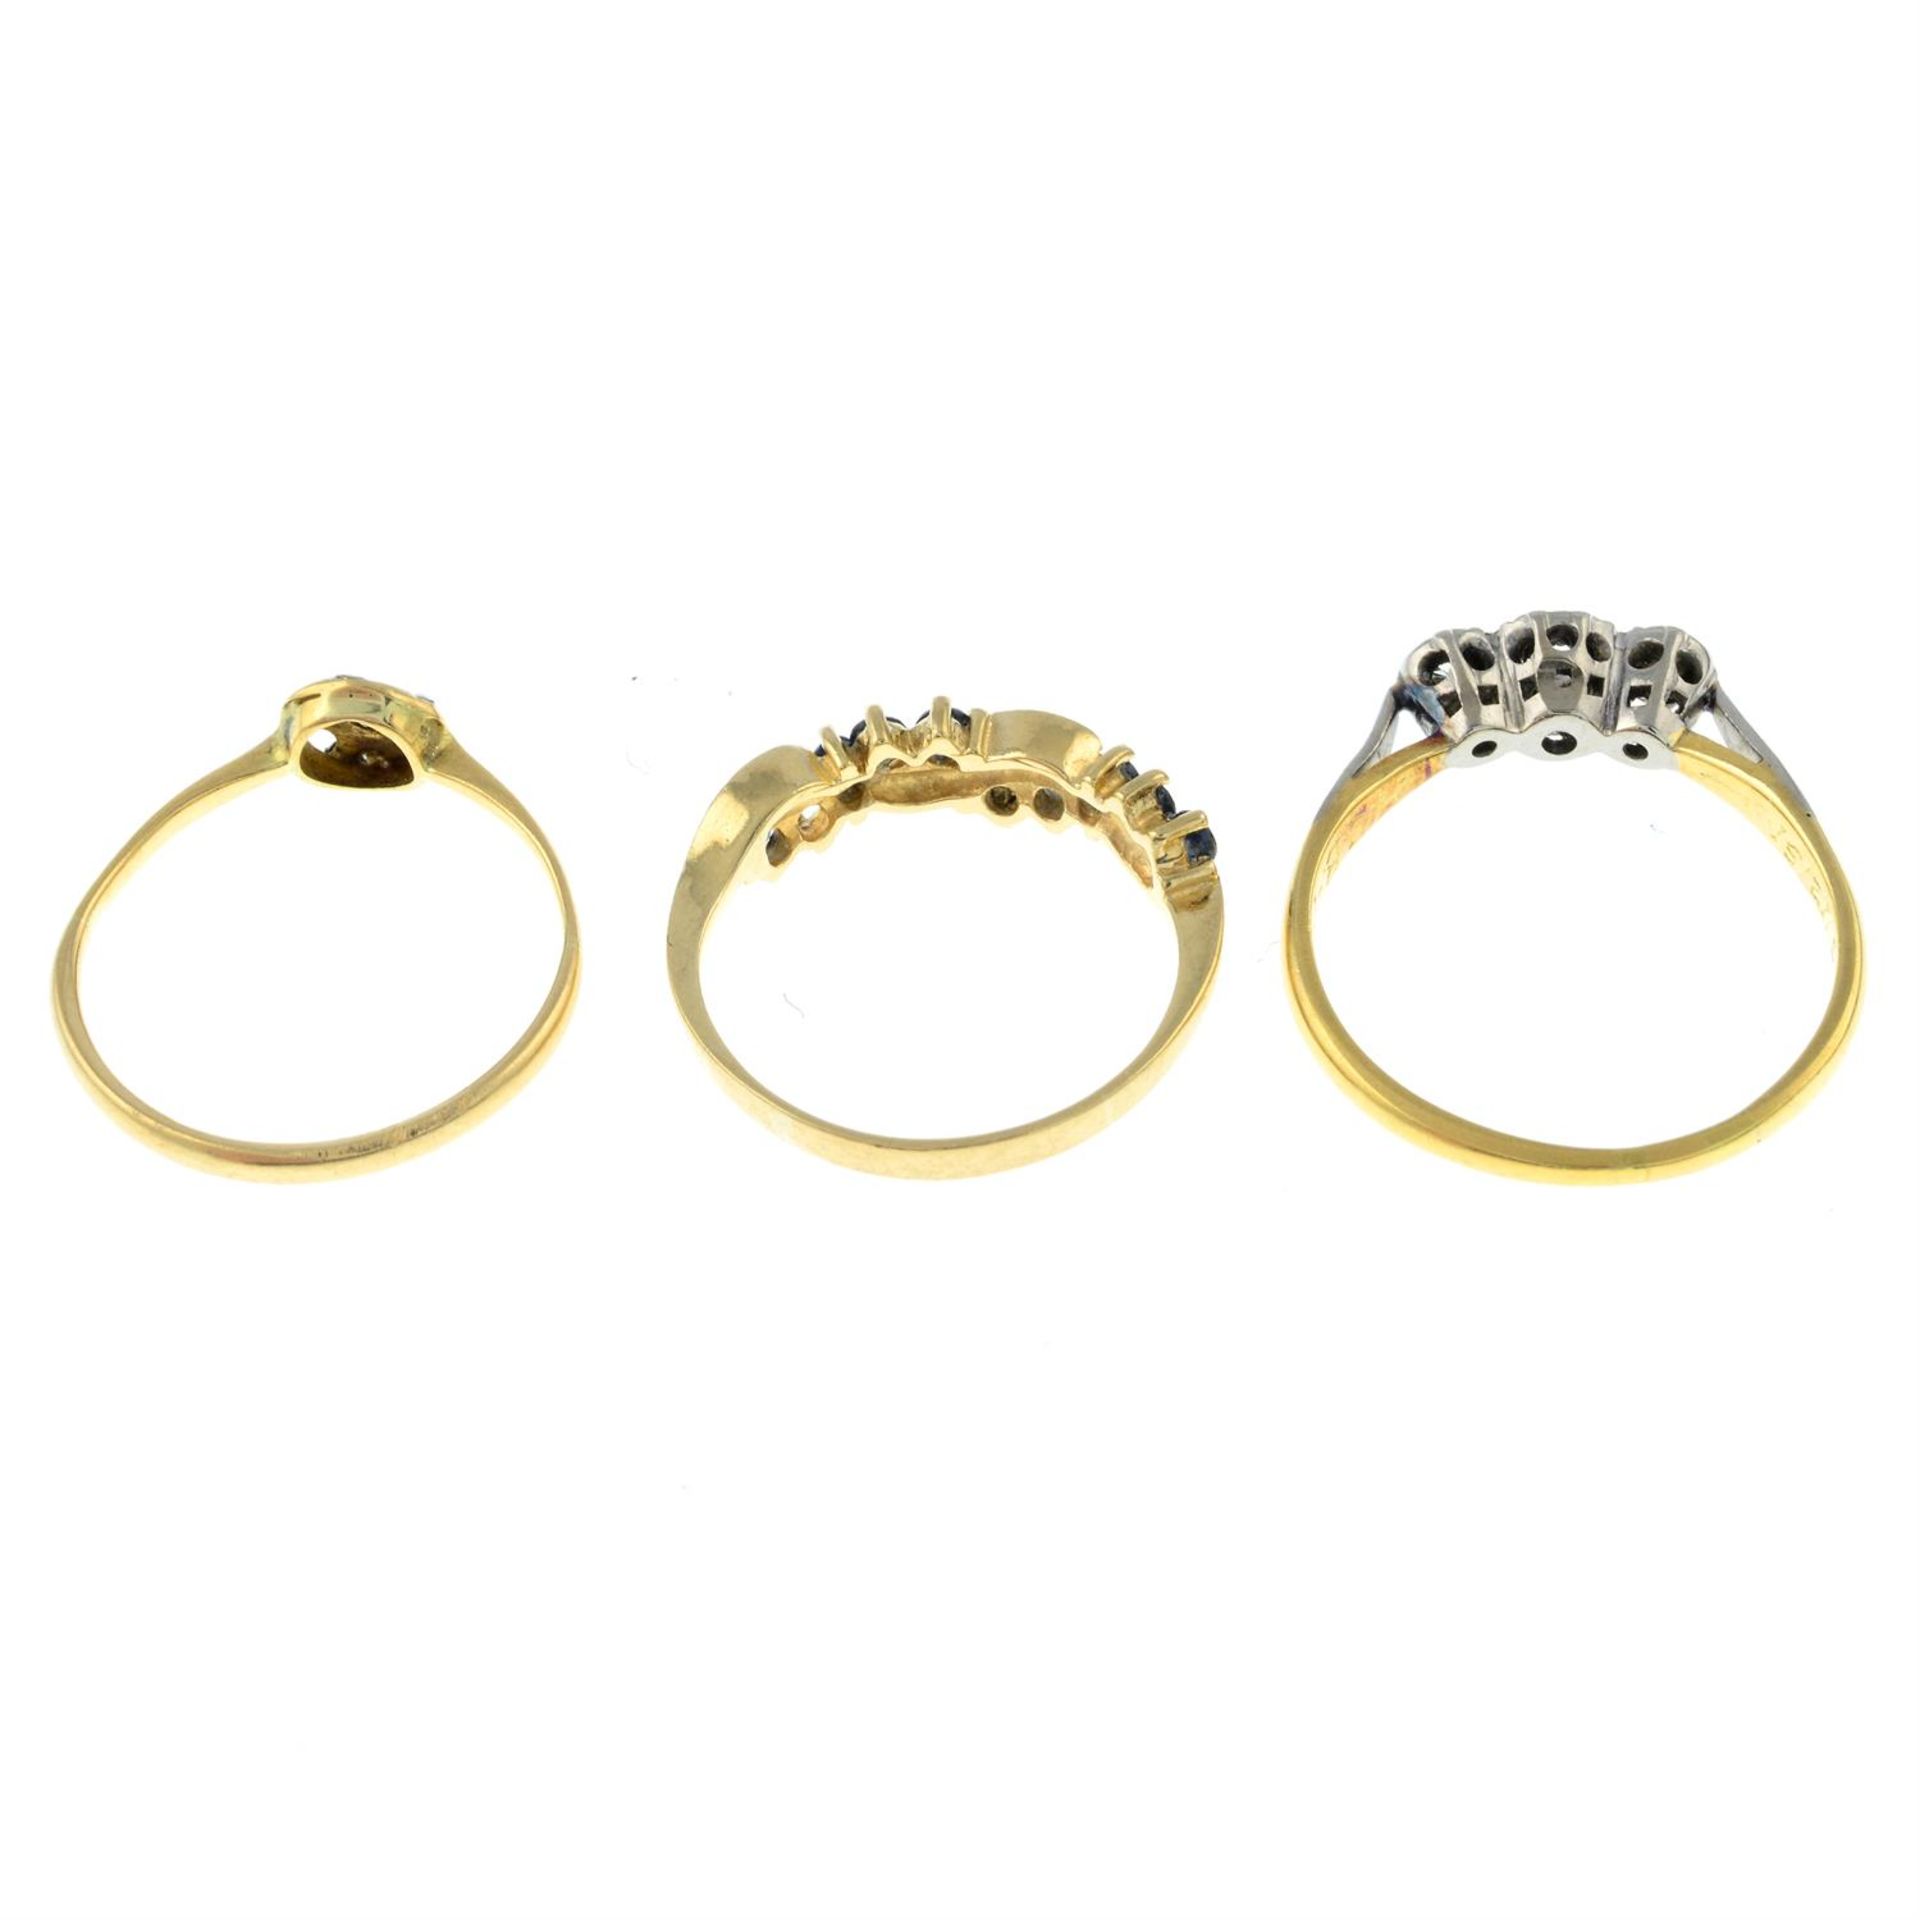 Three gem-set rings. - Image 2 of 2